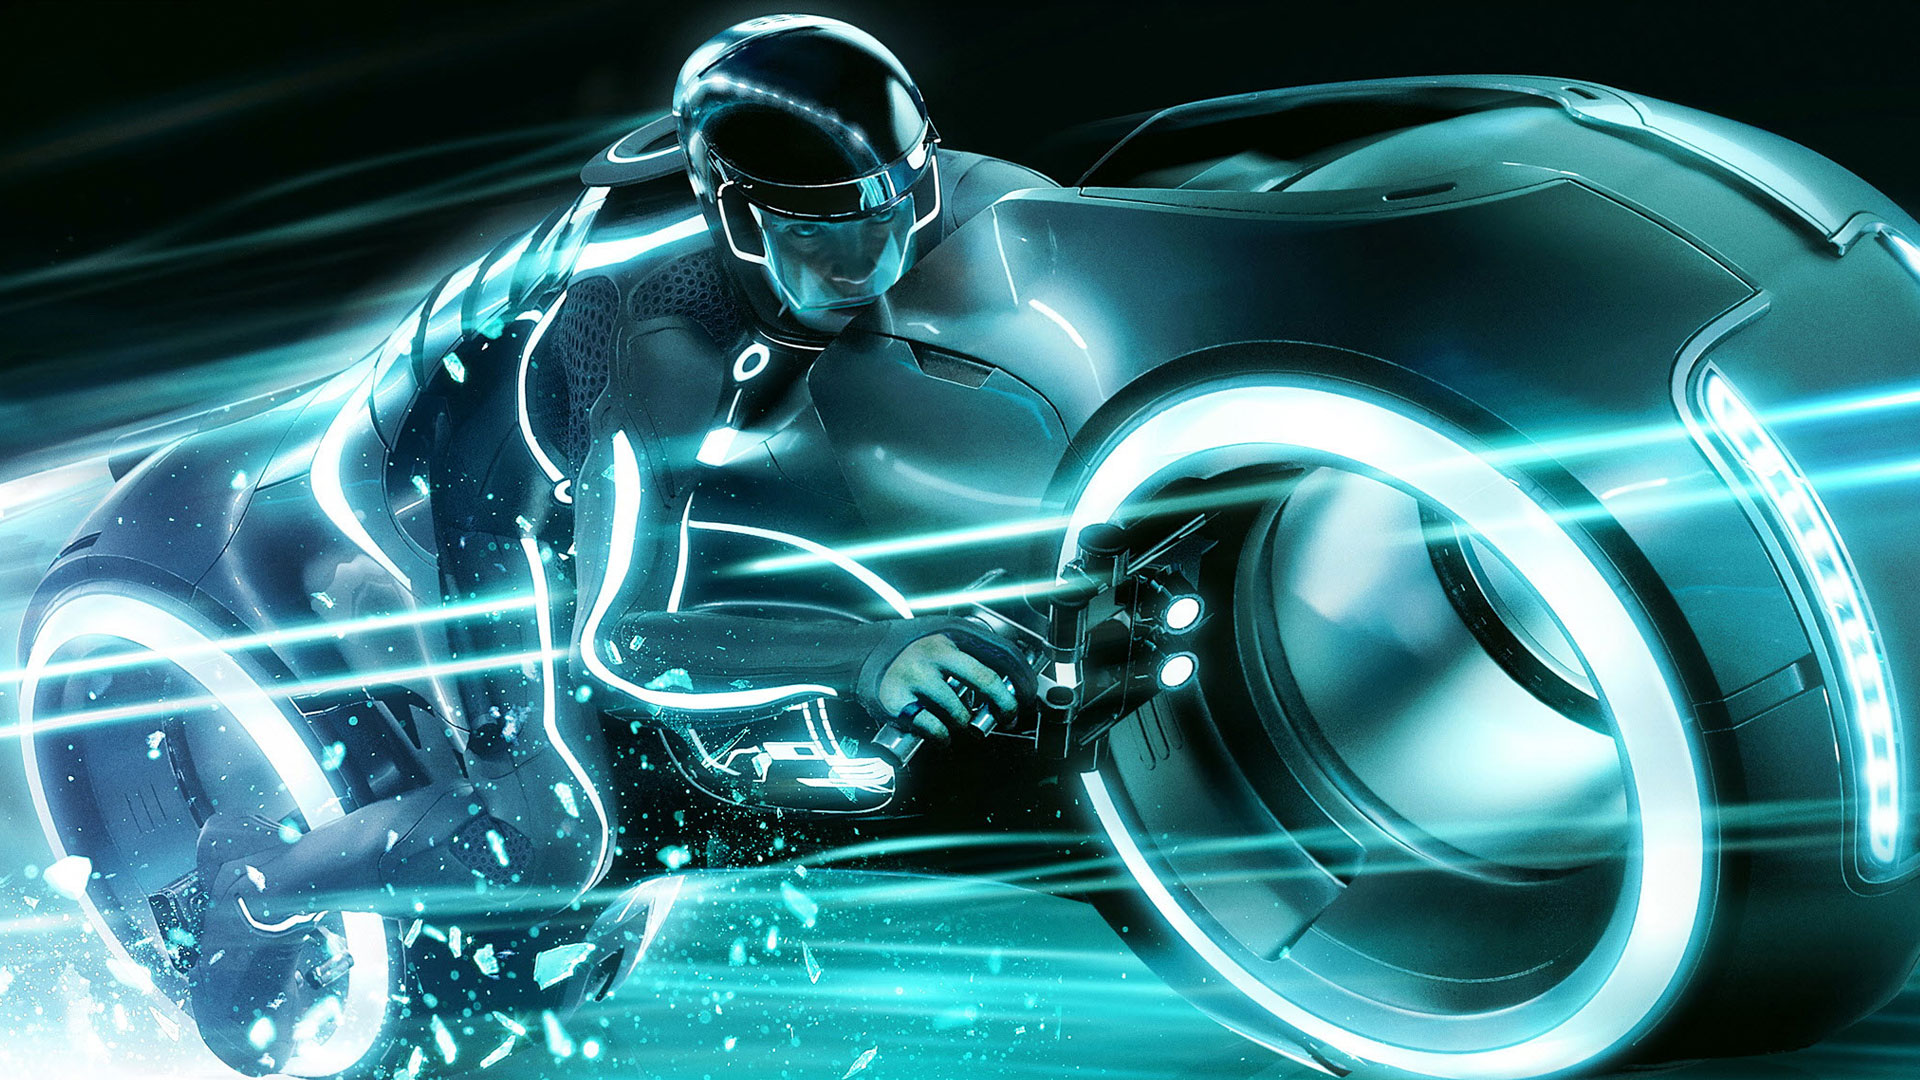 Tron legacy biker zooming through futuristic grid lines on a high-definition desktop wallpaper.